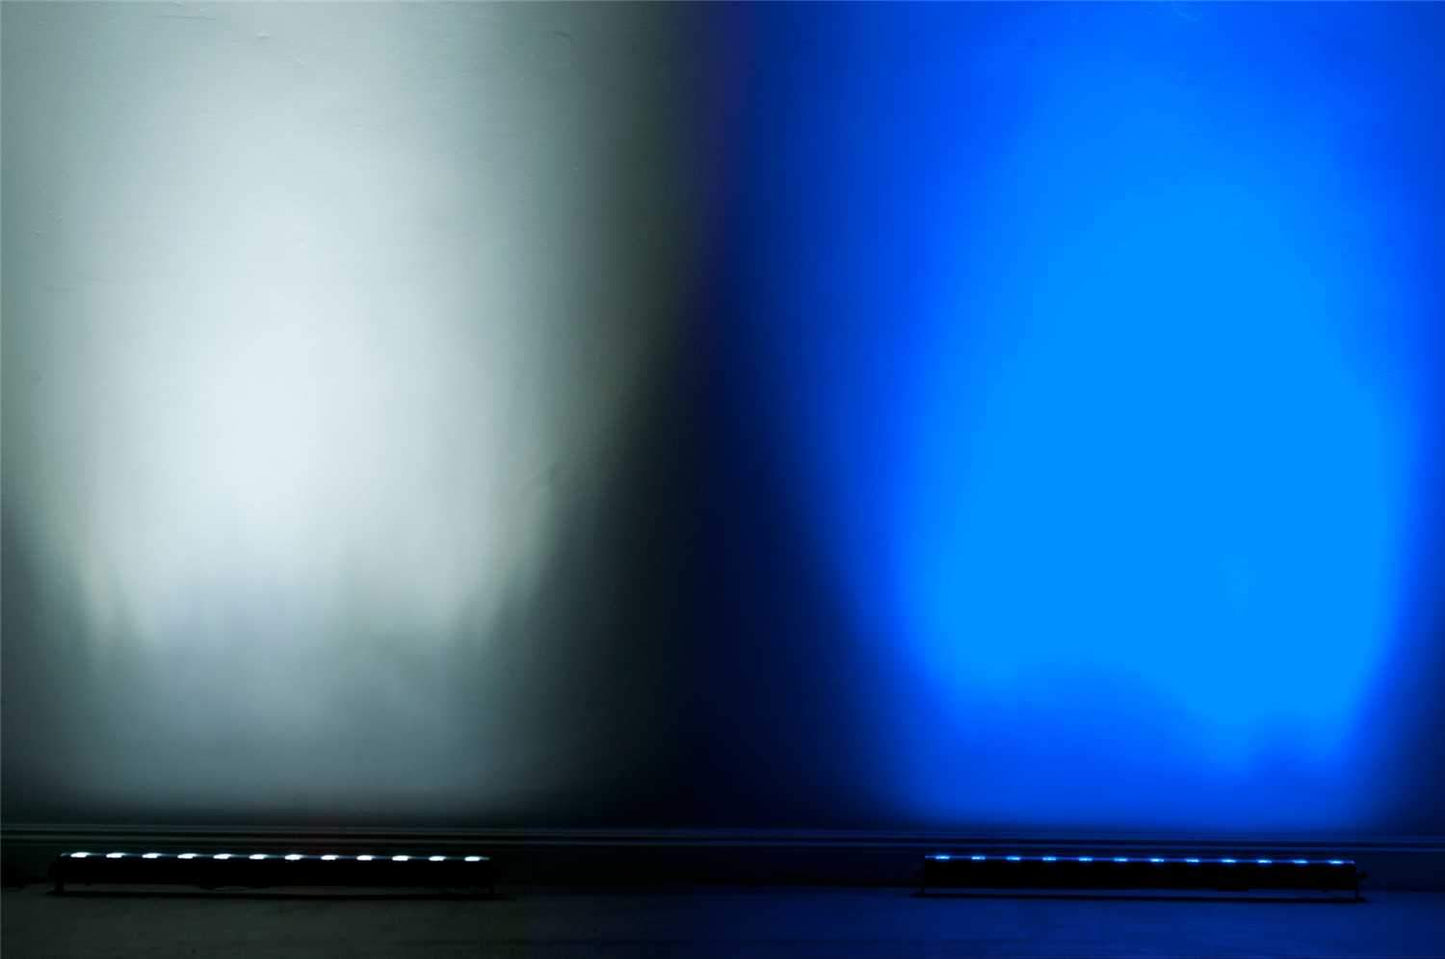 ADJ American DJ UB 12H LED Linear Wash Light 2-Pack with DMX Controller - PSSL ProSound and Stage Lighting